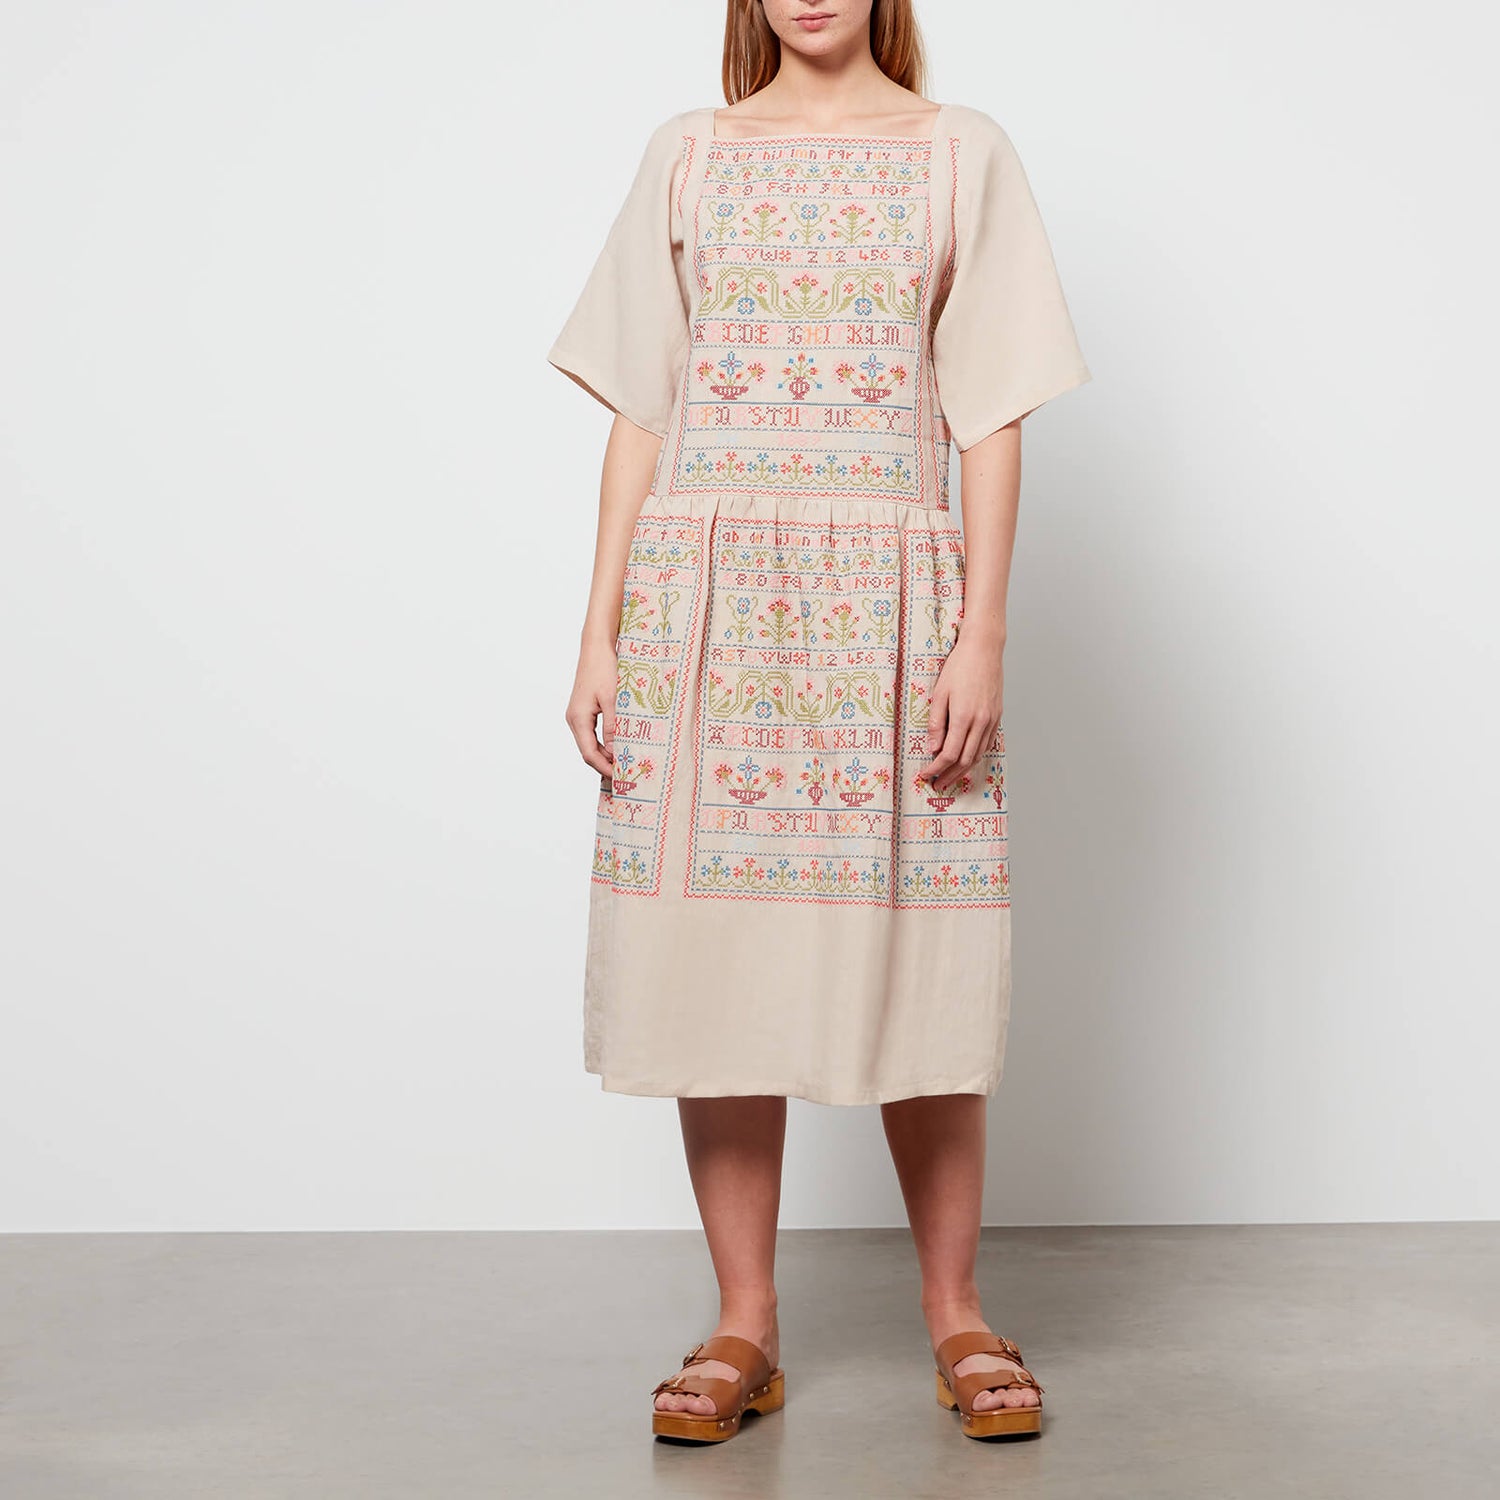 Meadows Women's Sampler Dress - Sampler Embroidery